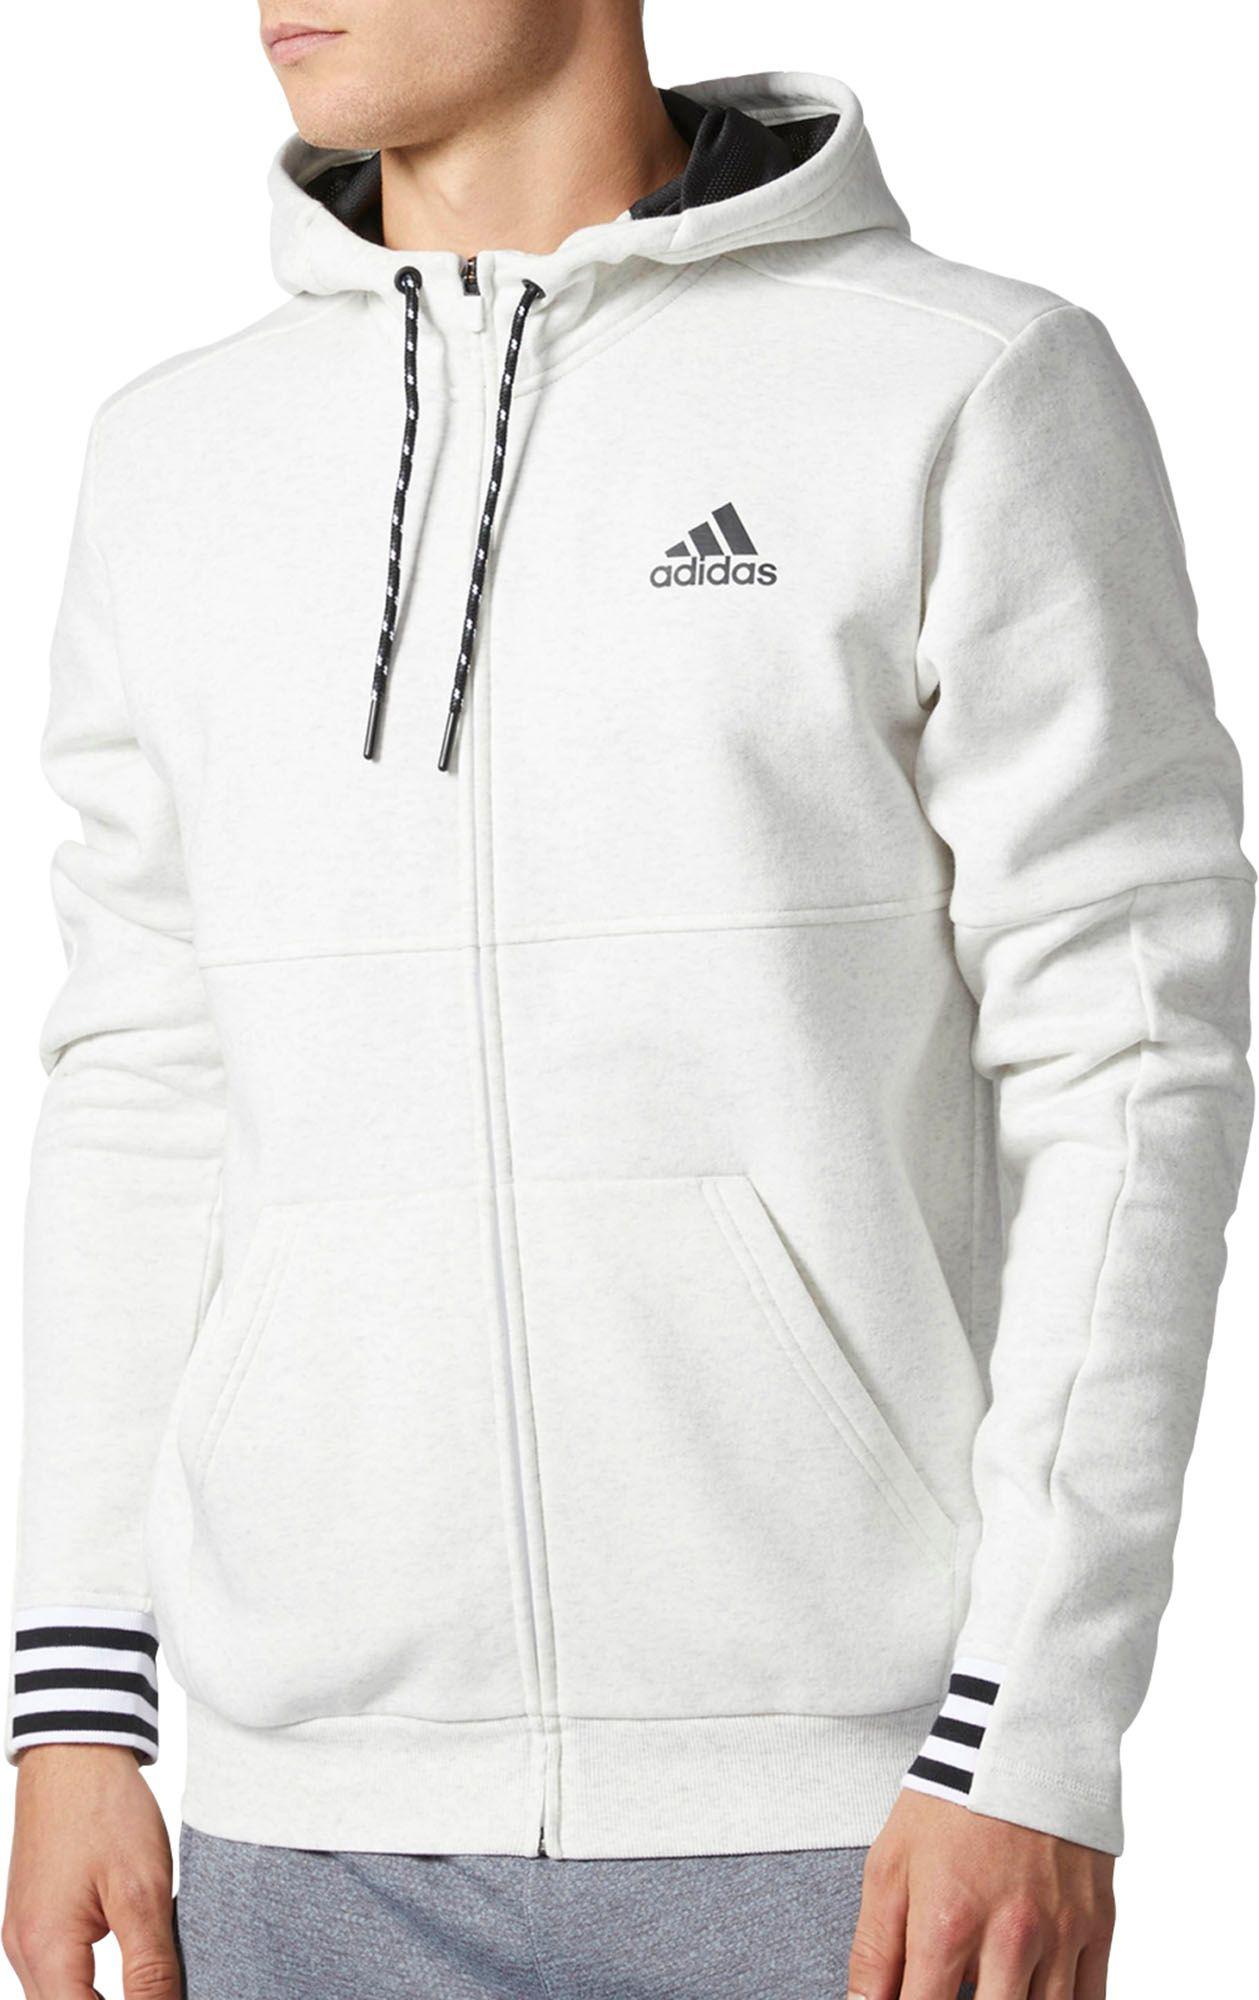 adidas Post Game Full Zip Hoodie in White for Men - Lyst